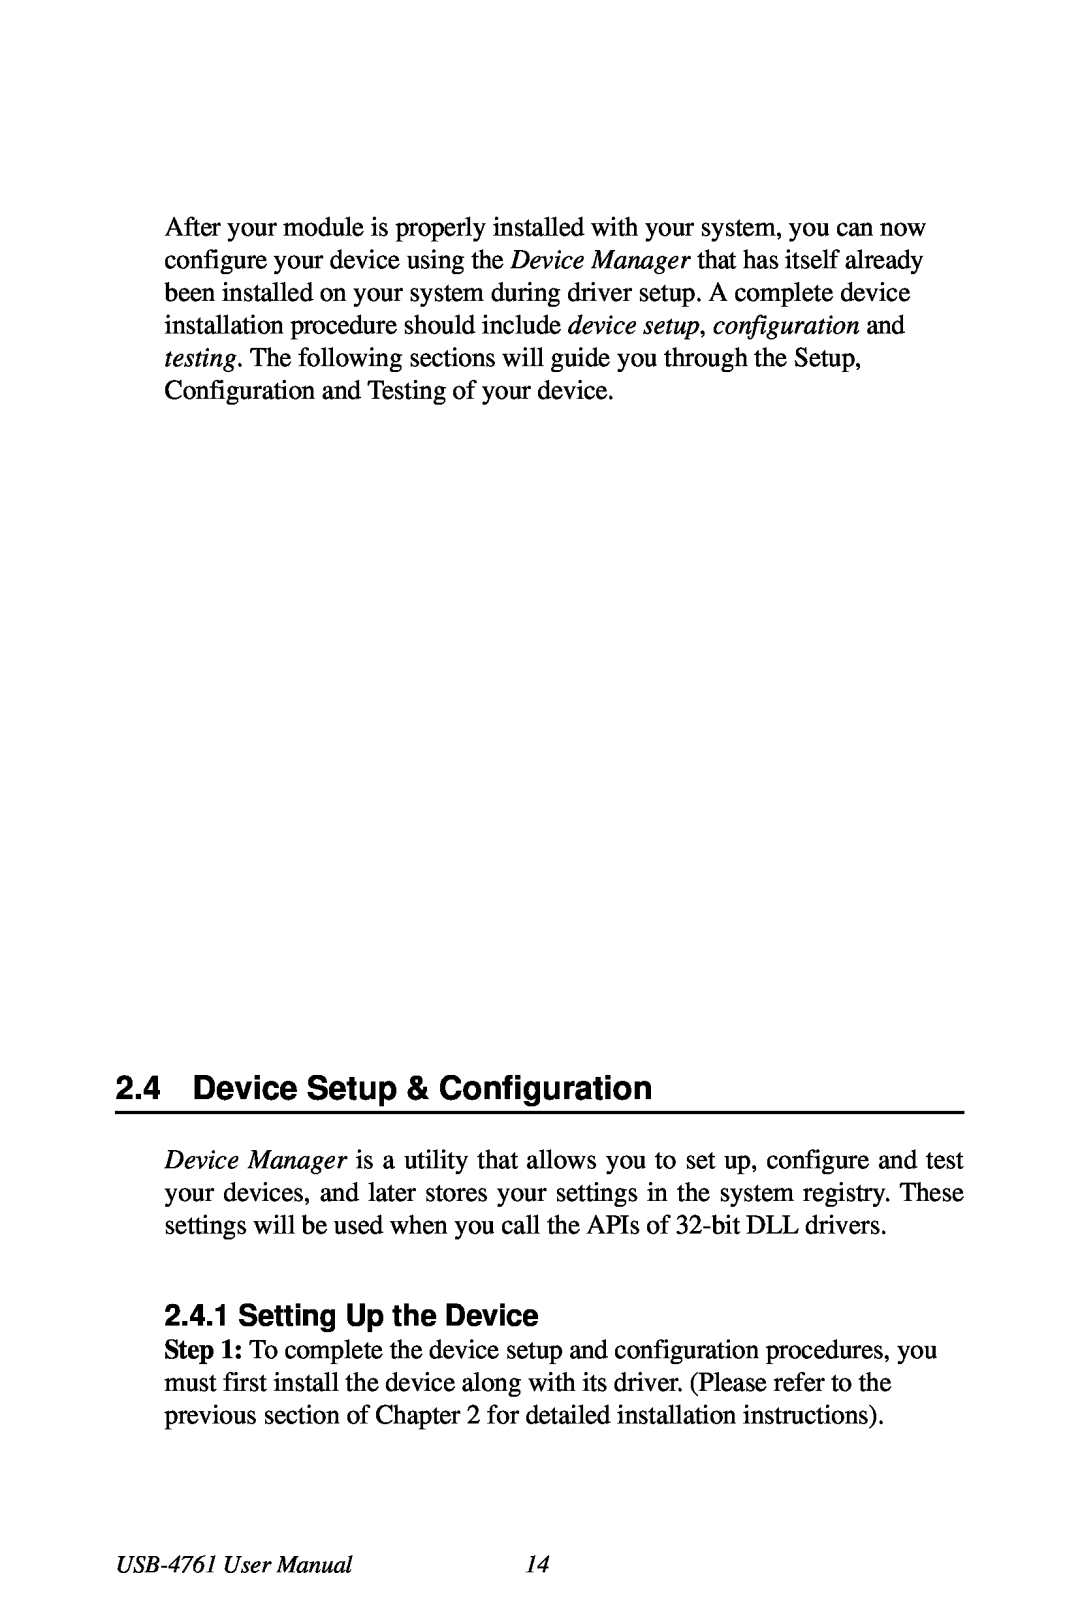 Omega Vehicle Security USB-4761 manual Device Setup & Configuration, Setting Up the Device 